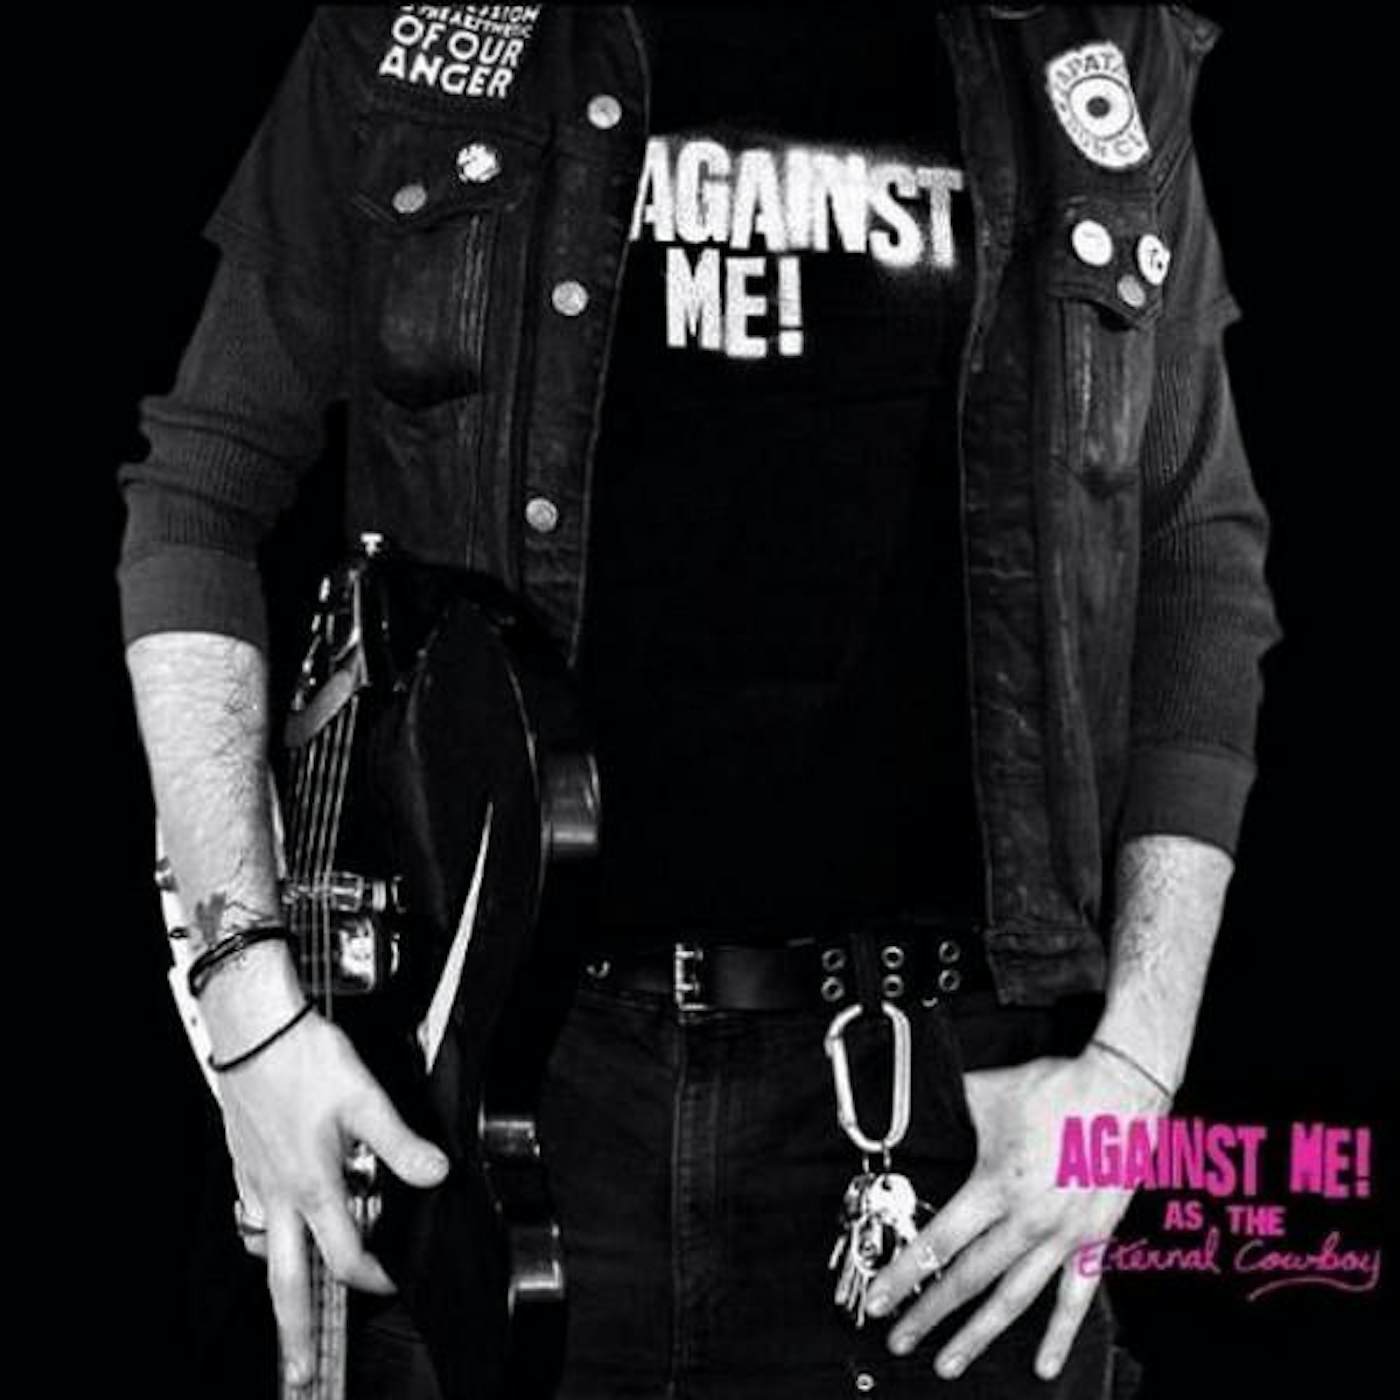 Against Me! As the Eternal Cowboy Vinyl Record